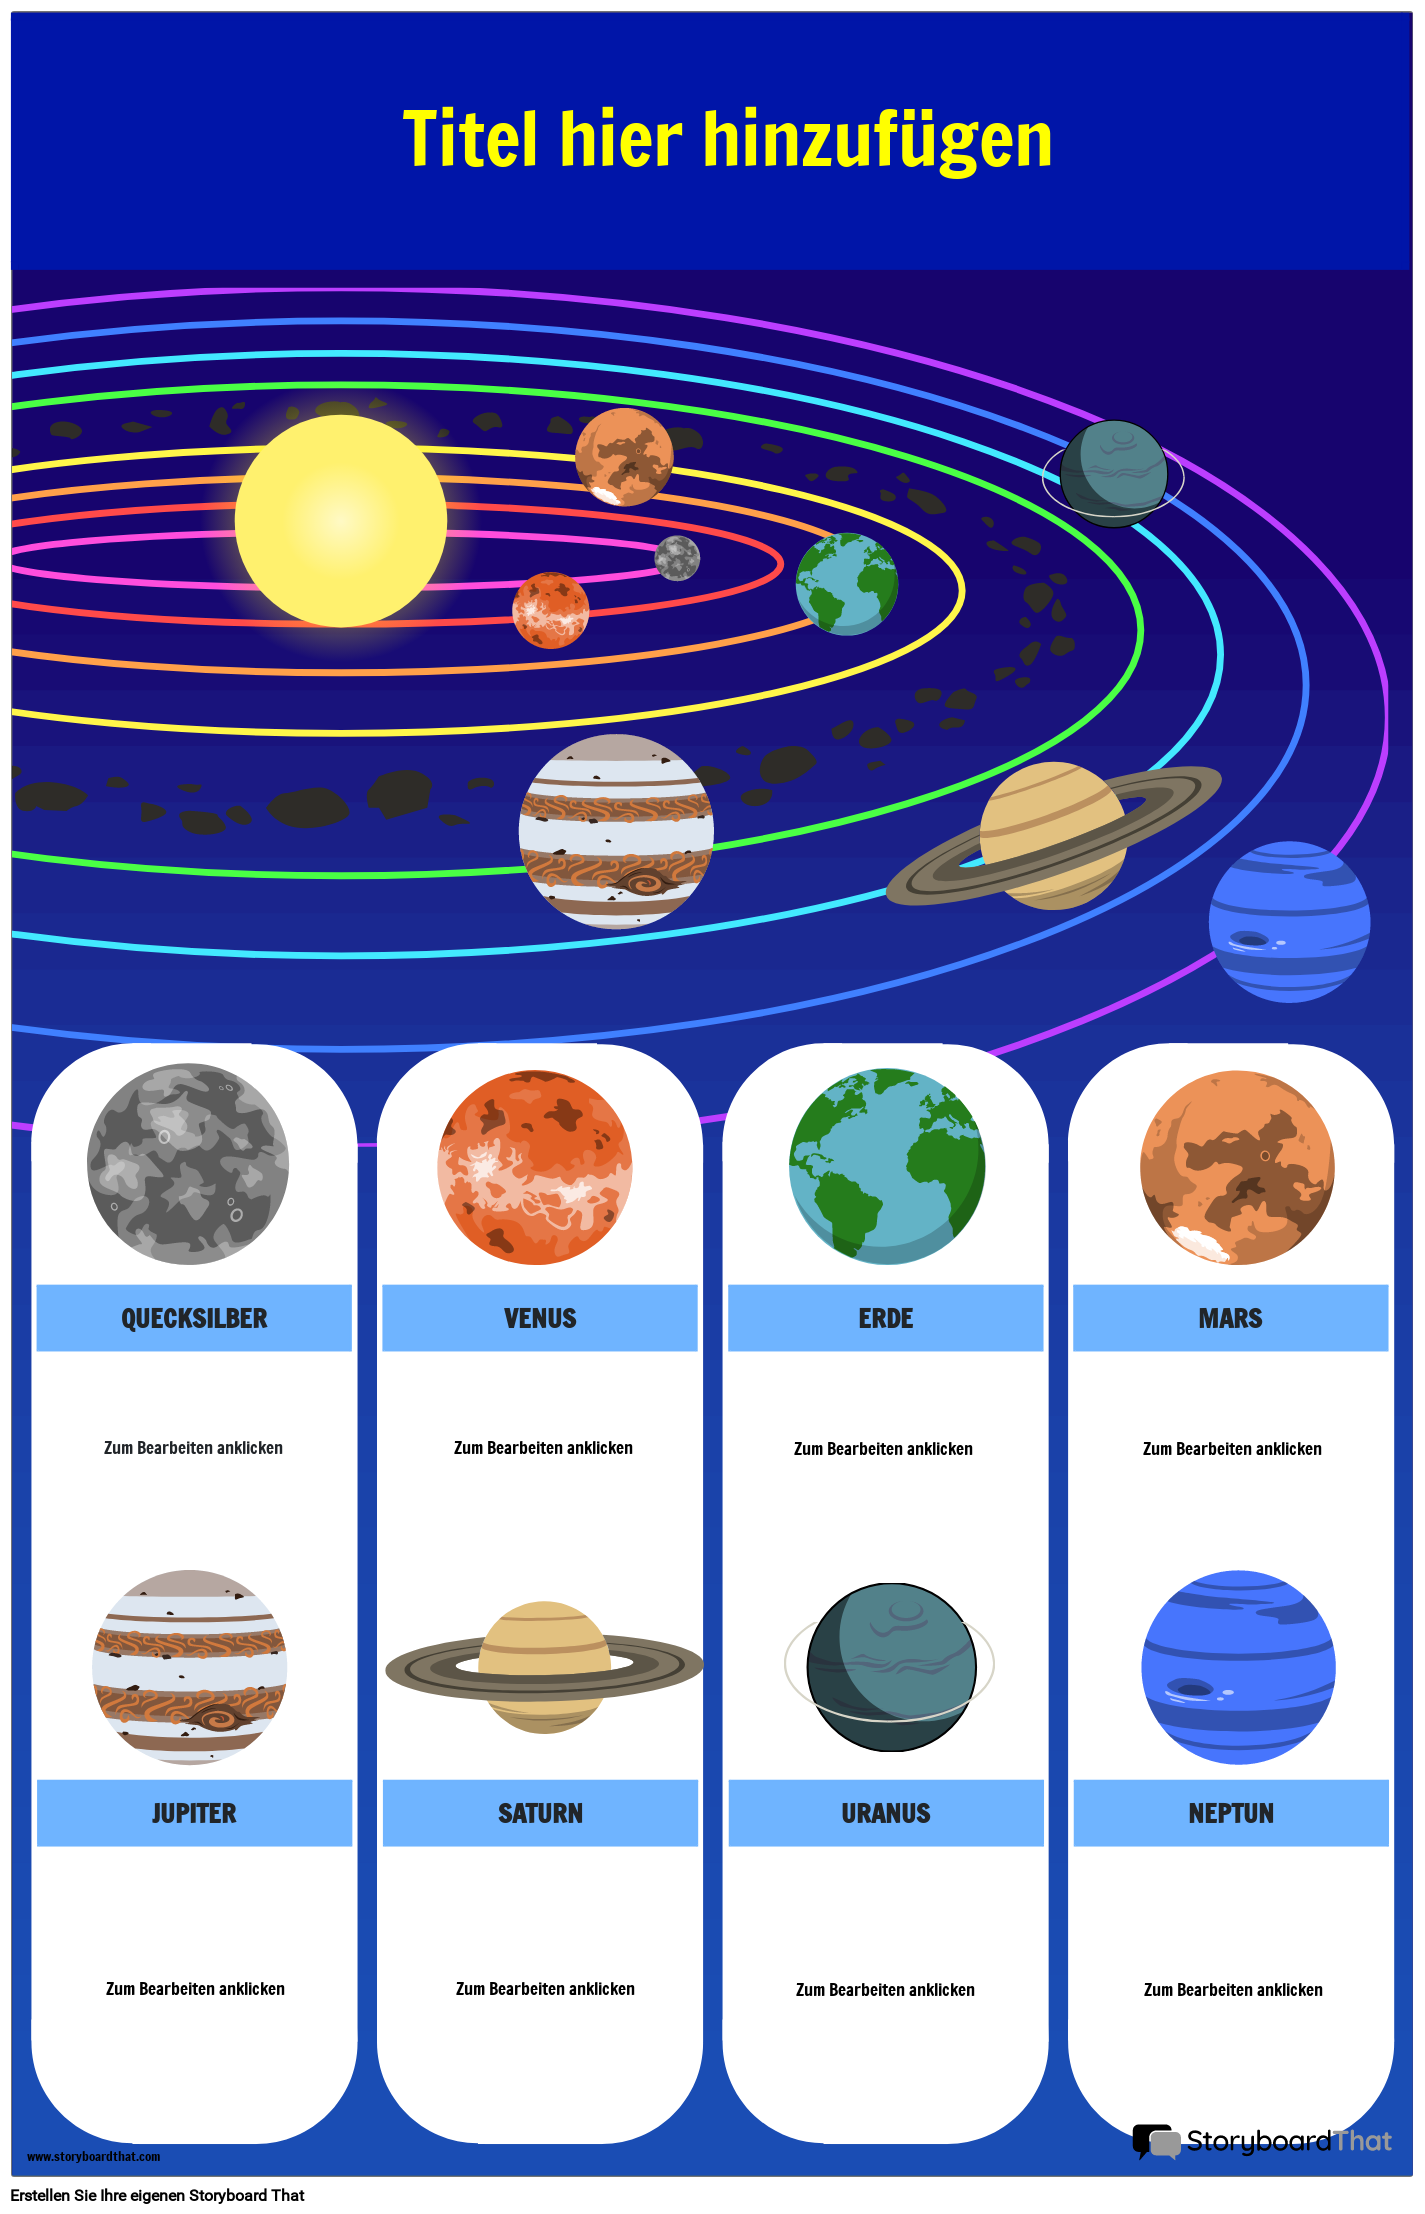 Klassenzimmerplakat des Sonnensystems